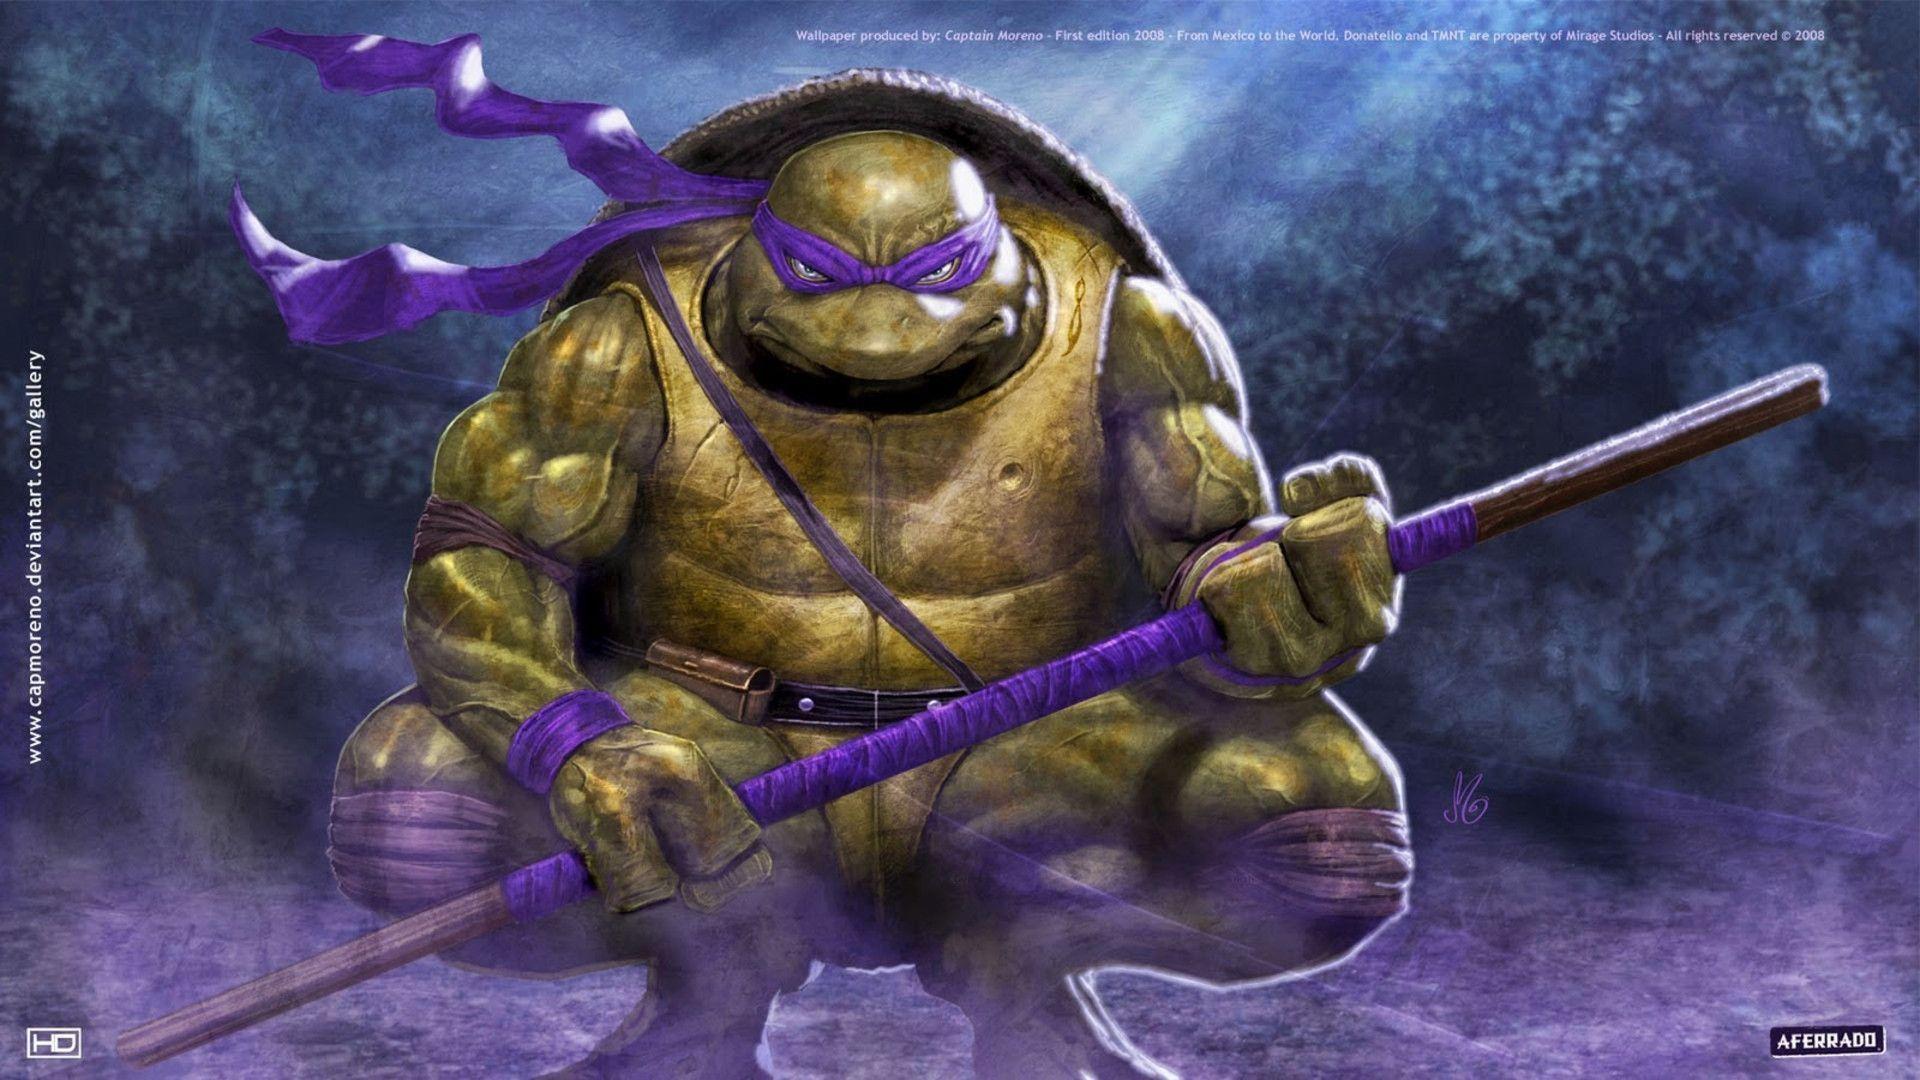 Donatello Teenage Mutant Ninja Turtle